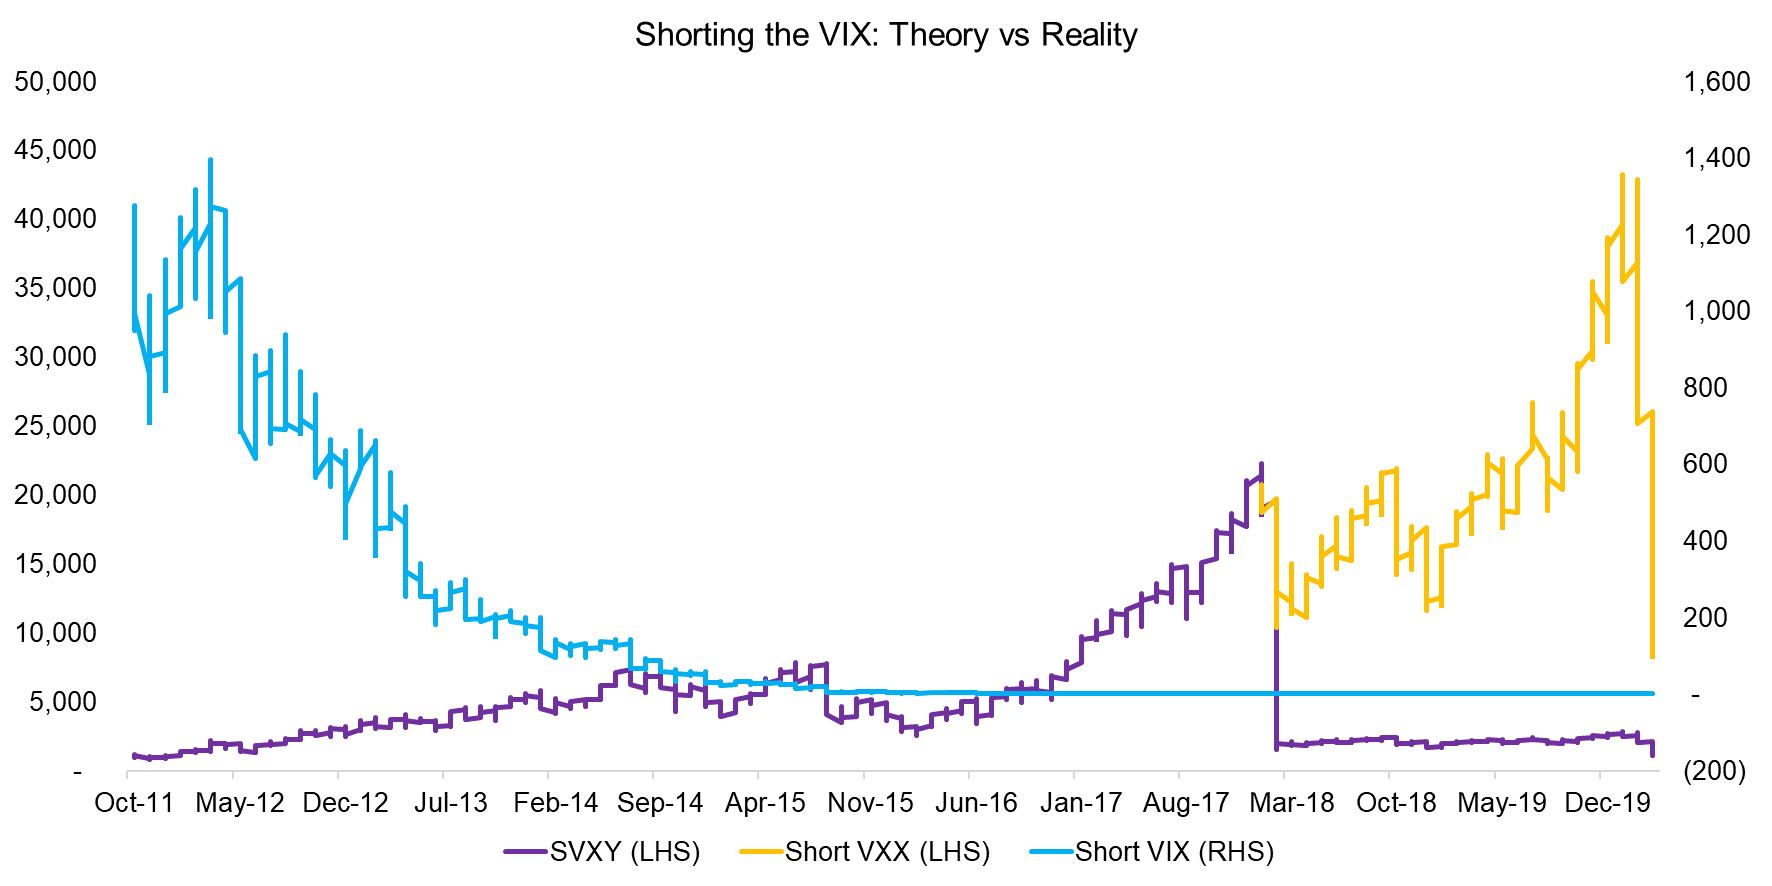 Shorting the VIX Theory vs Reality